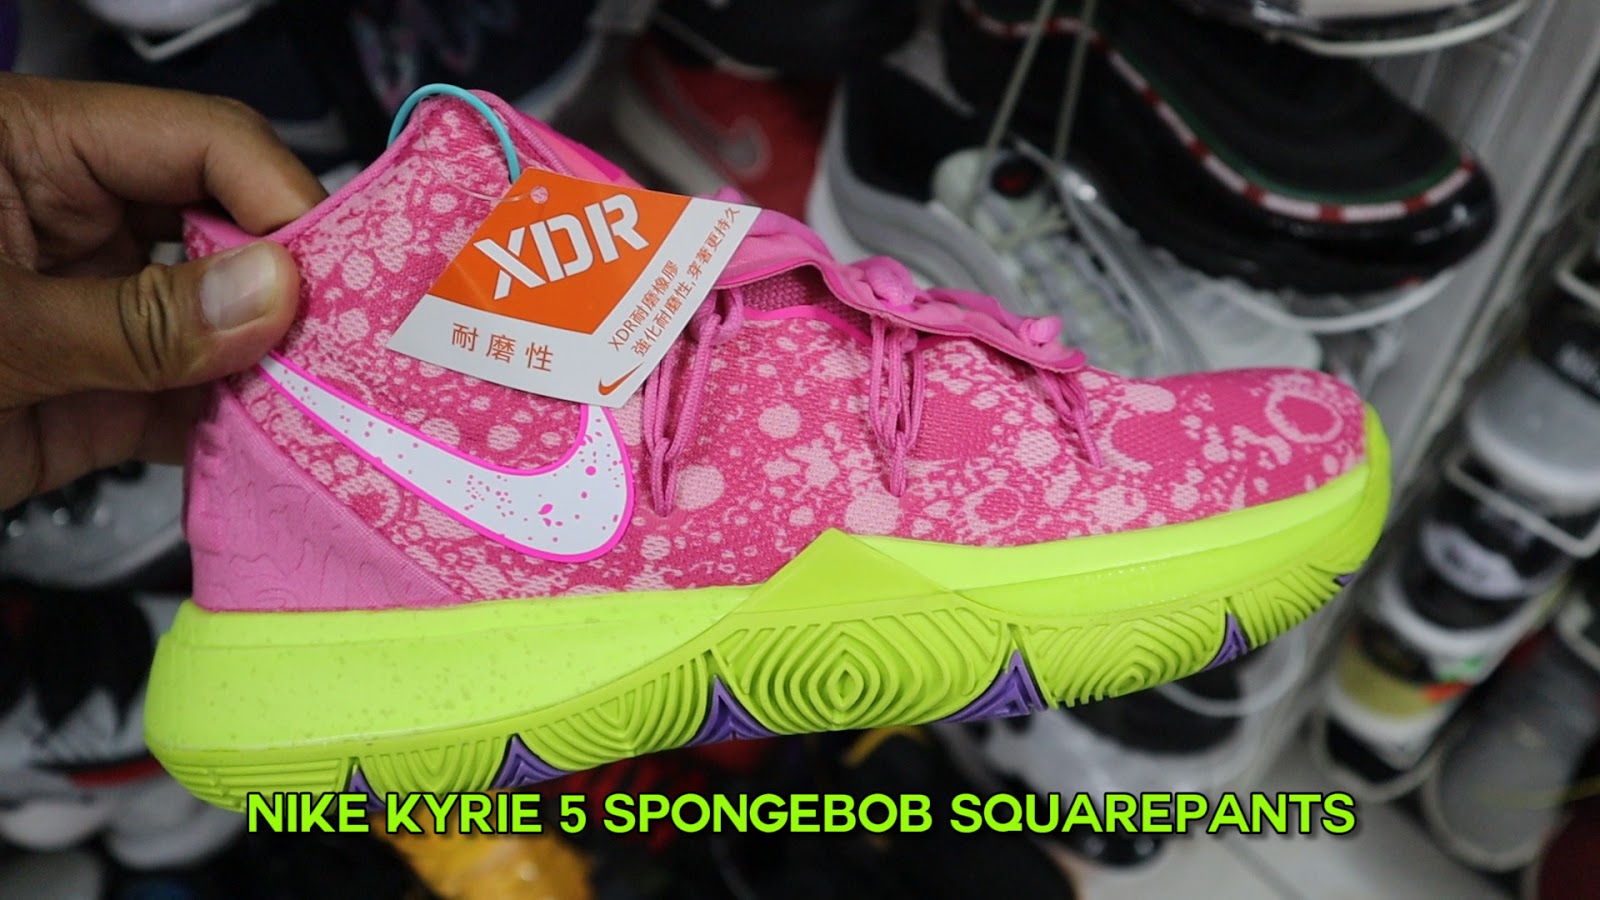 Kyrie 5 Spongebob Patrick Kids converse shoes Black